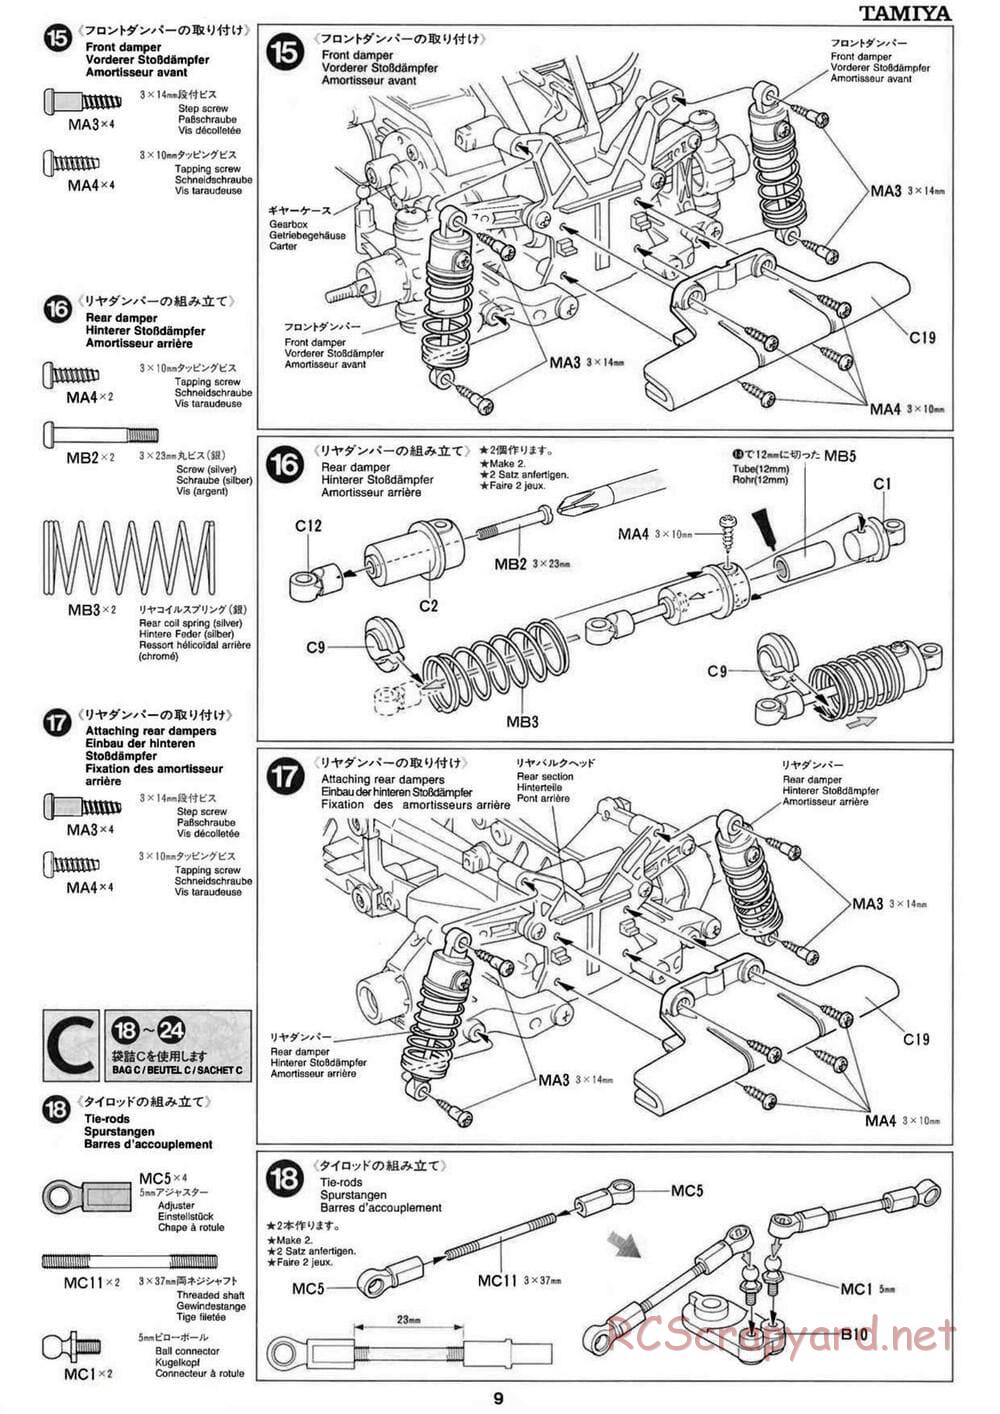 Tamiya - Peugeot 306 Maxi WRC - FF-02 Chassis - Manual - Page 9